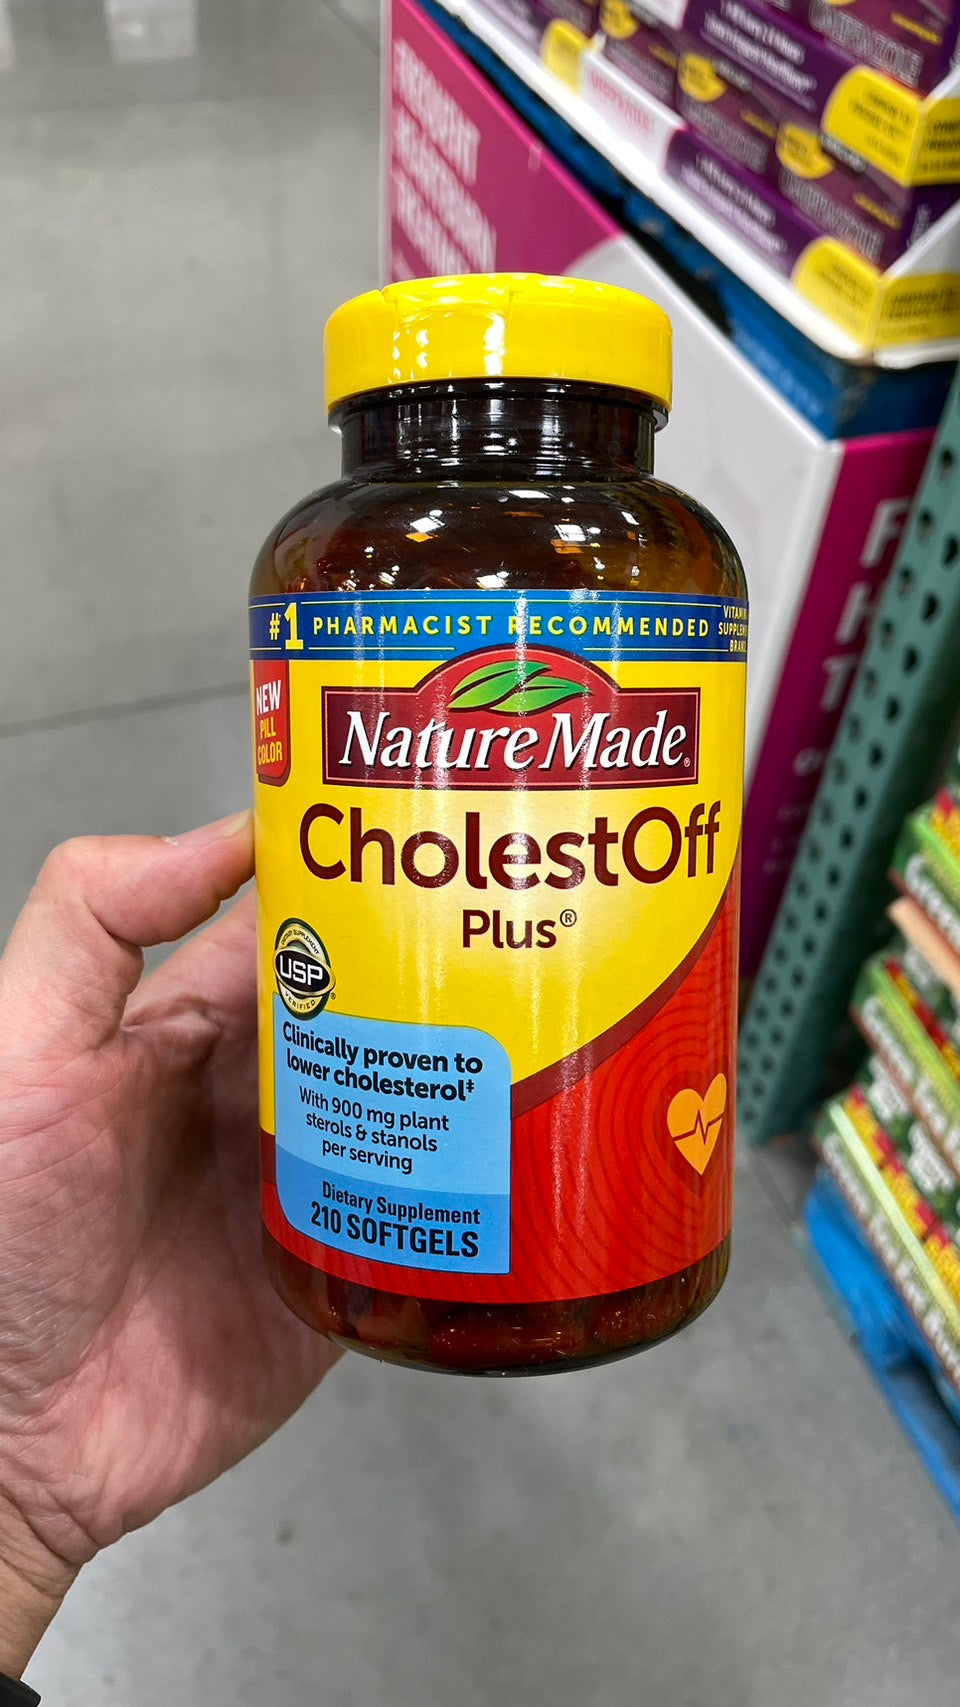 Nature Made CholestOFF Plus, 210 Softgels 萊萃美 天然植物固醇加強錠 CholestOff off Plus 210 顆